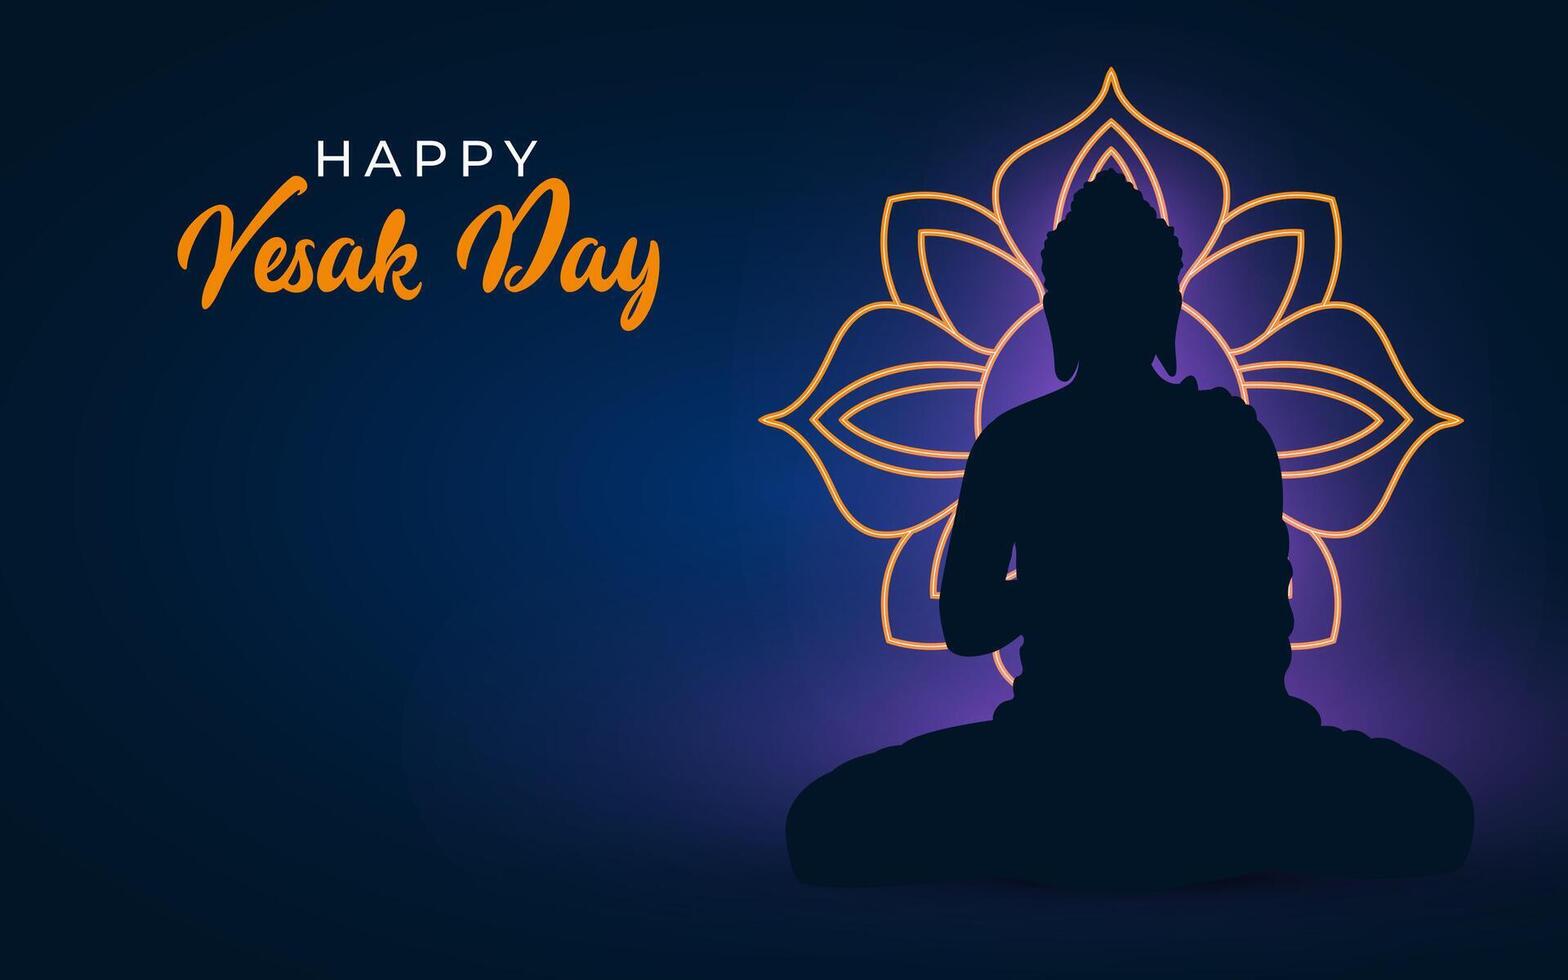 gelukkig Boeddha dag met siddhartha gautama standbeeld silhouet ontwerp illustratie. vector